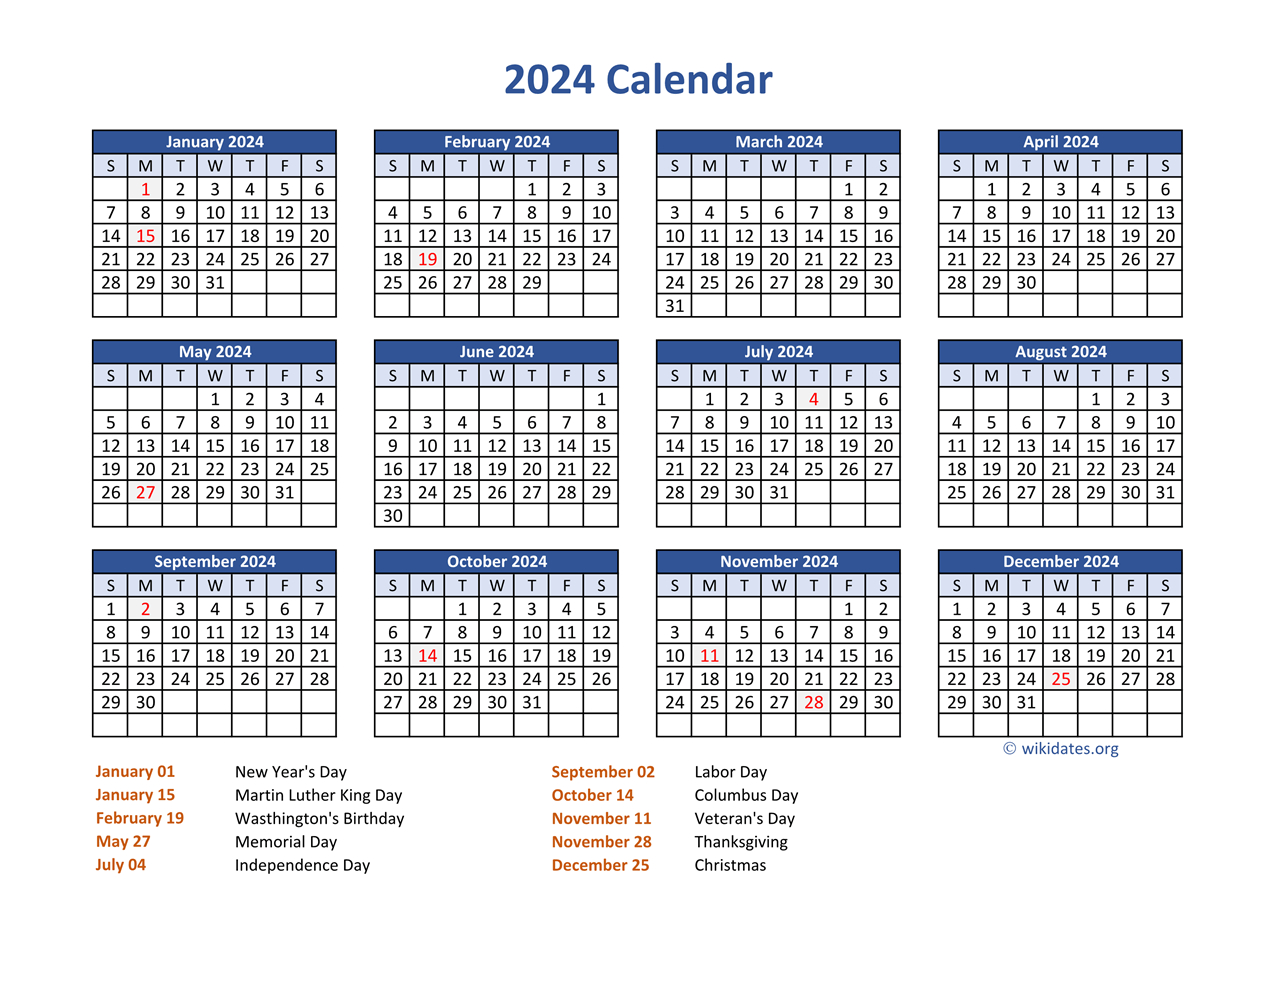 Pdf Calendar 2024 With Federal Holidays | Wikidates | Wiki Printable Calendar 2024